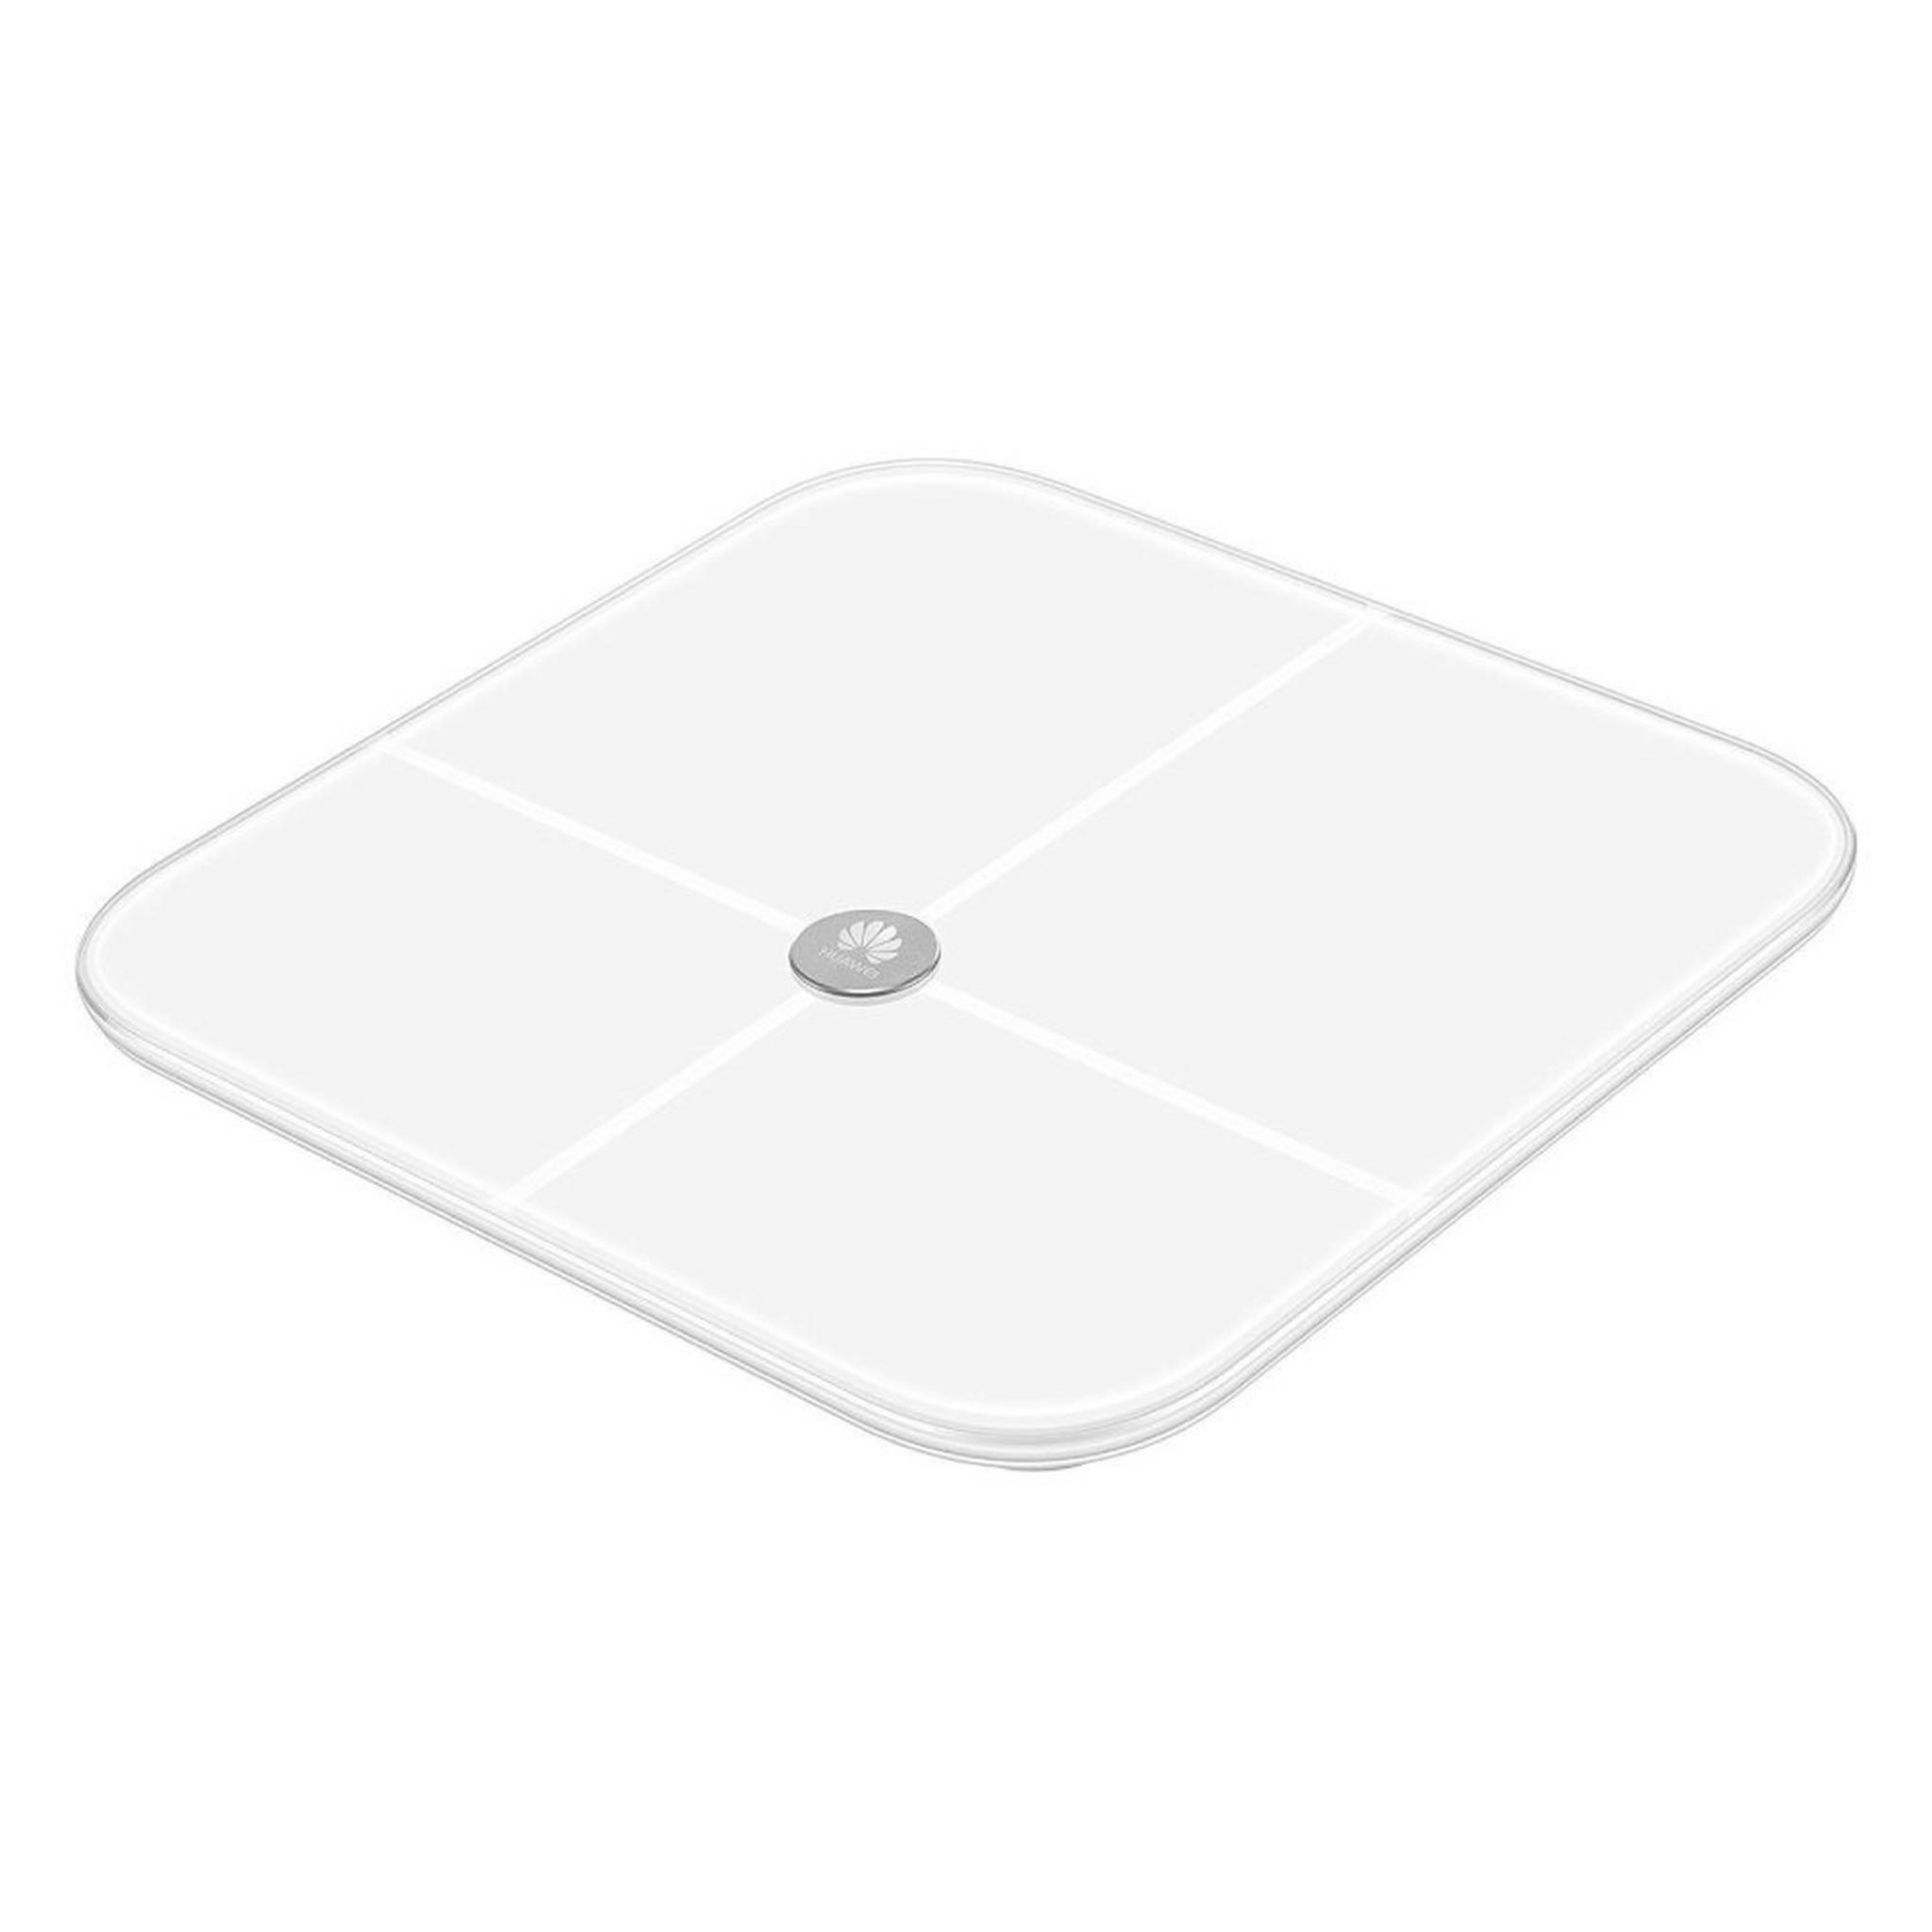 Huawei Smart Body Fat Scale